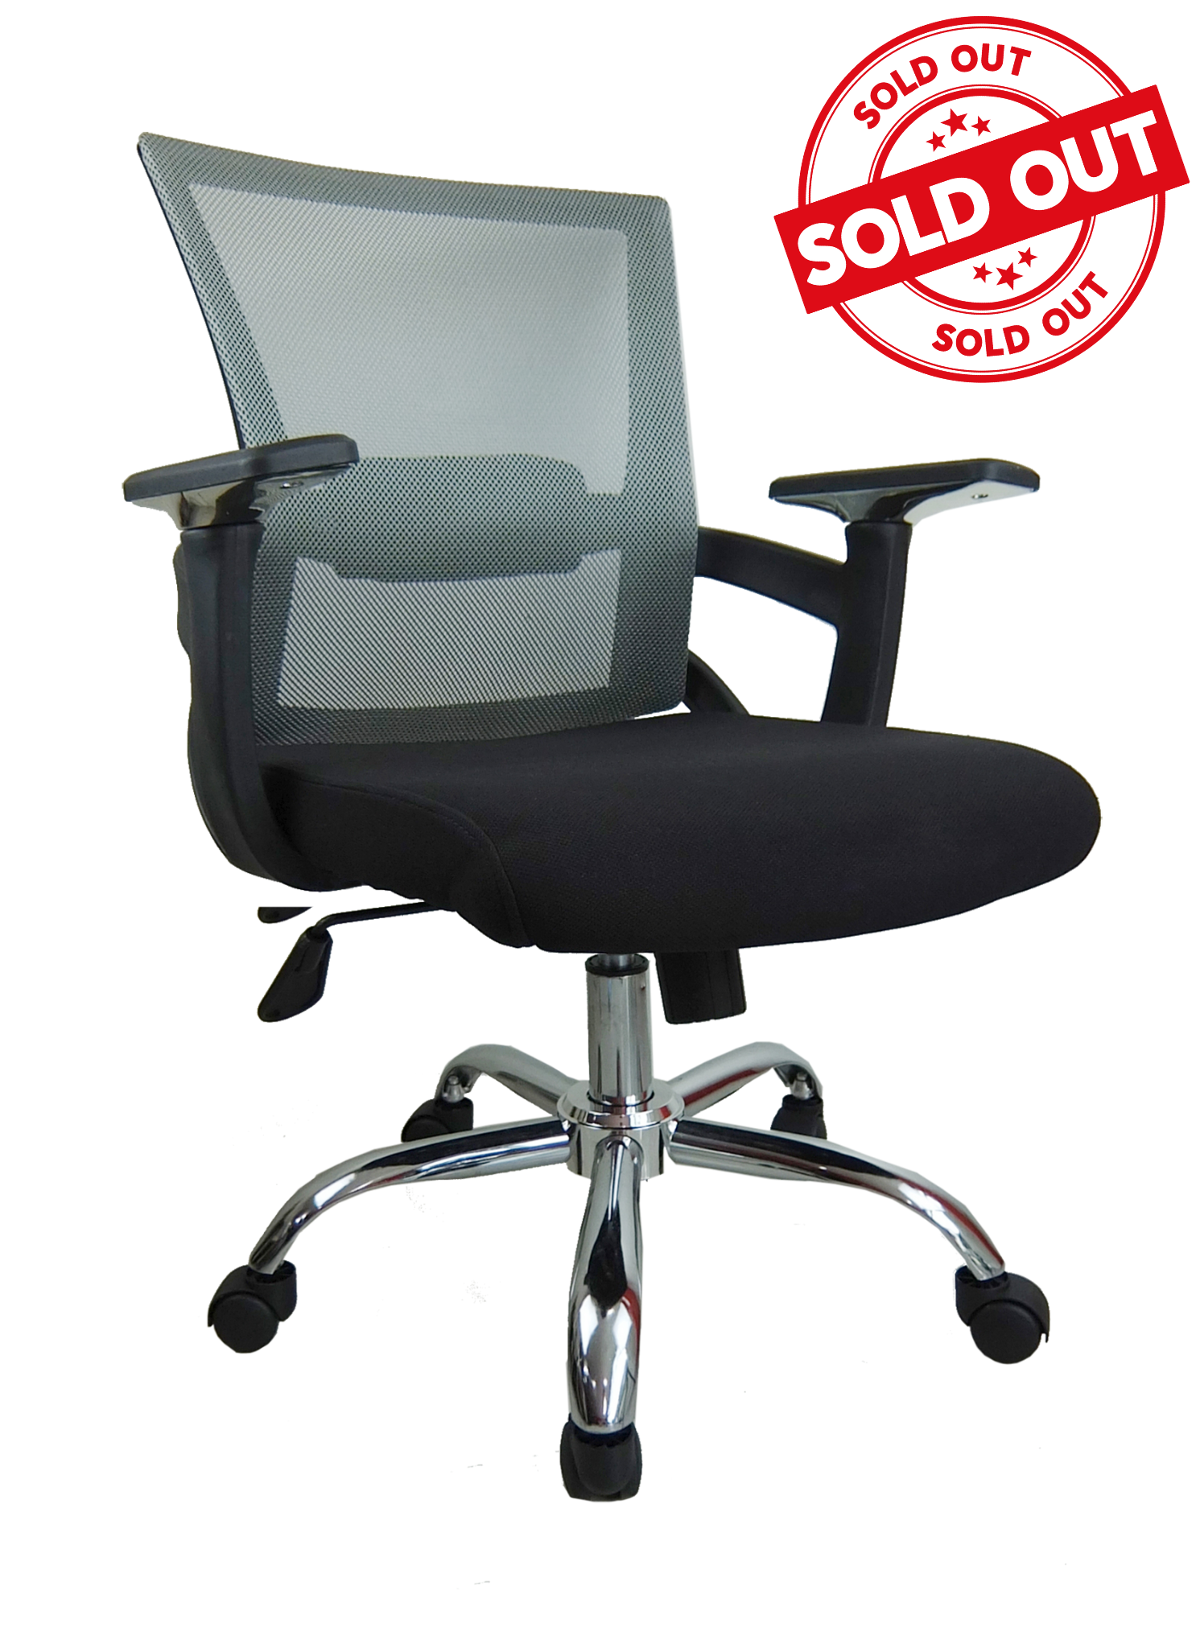 Super chair เก้าอี้สำนักงาน รุ่น ERGO-GTO 305